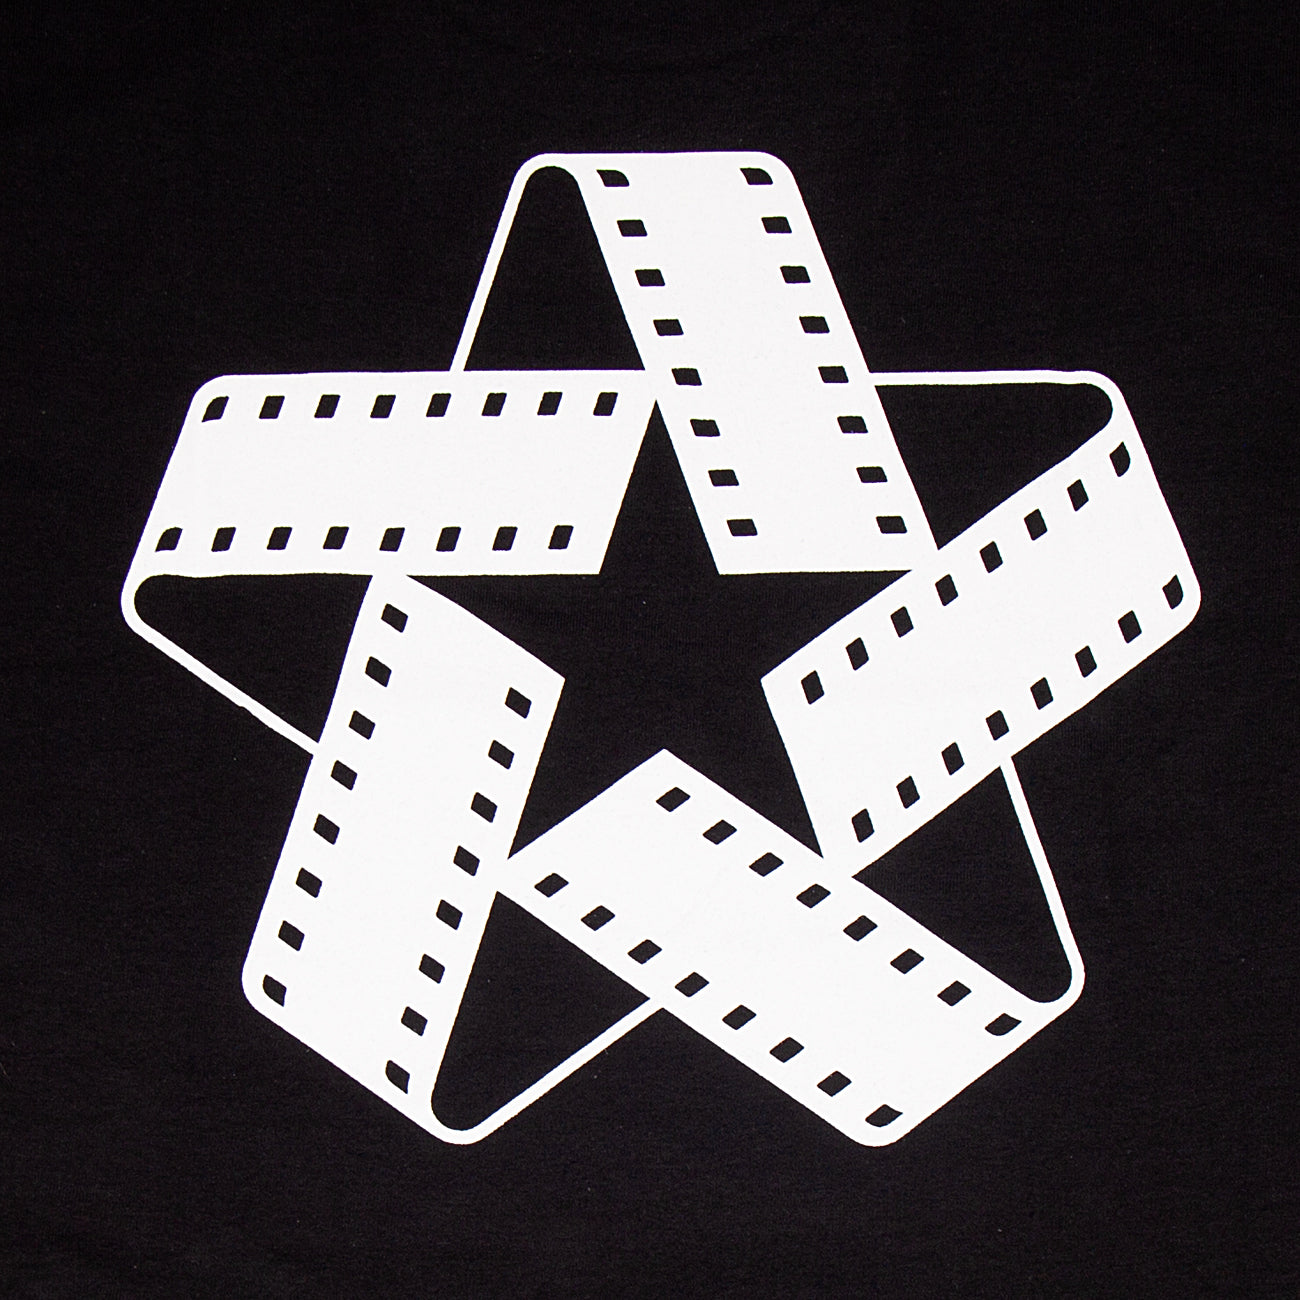 North Film Star Logo T-Shirt - Black/White